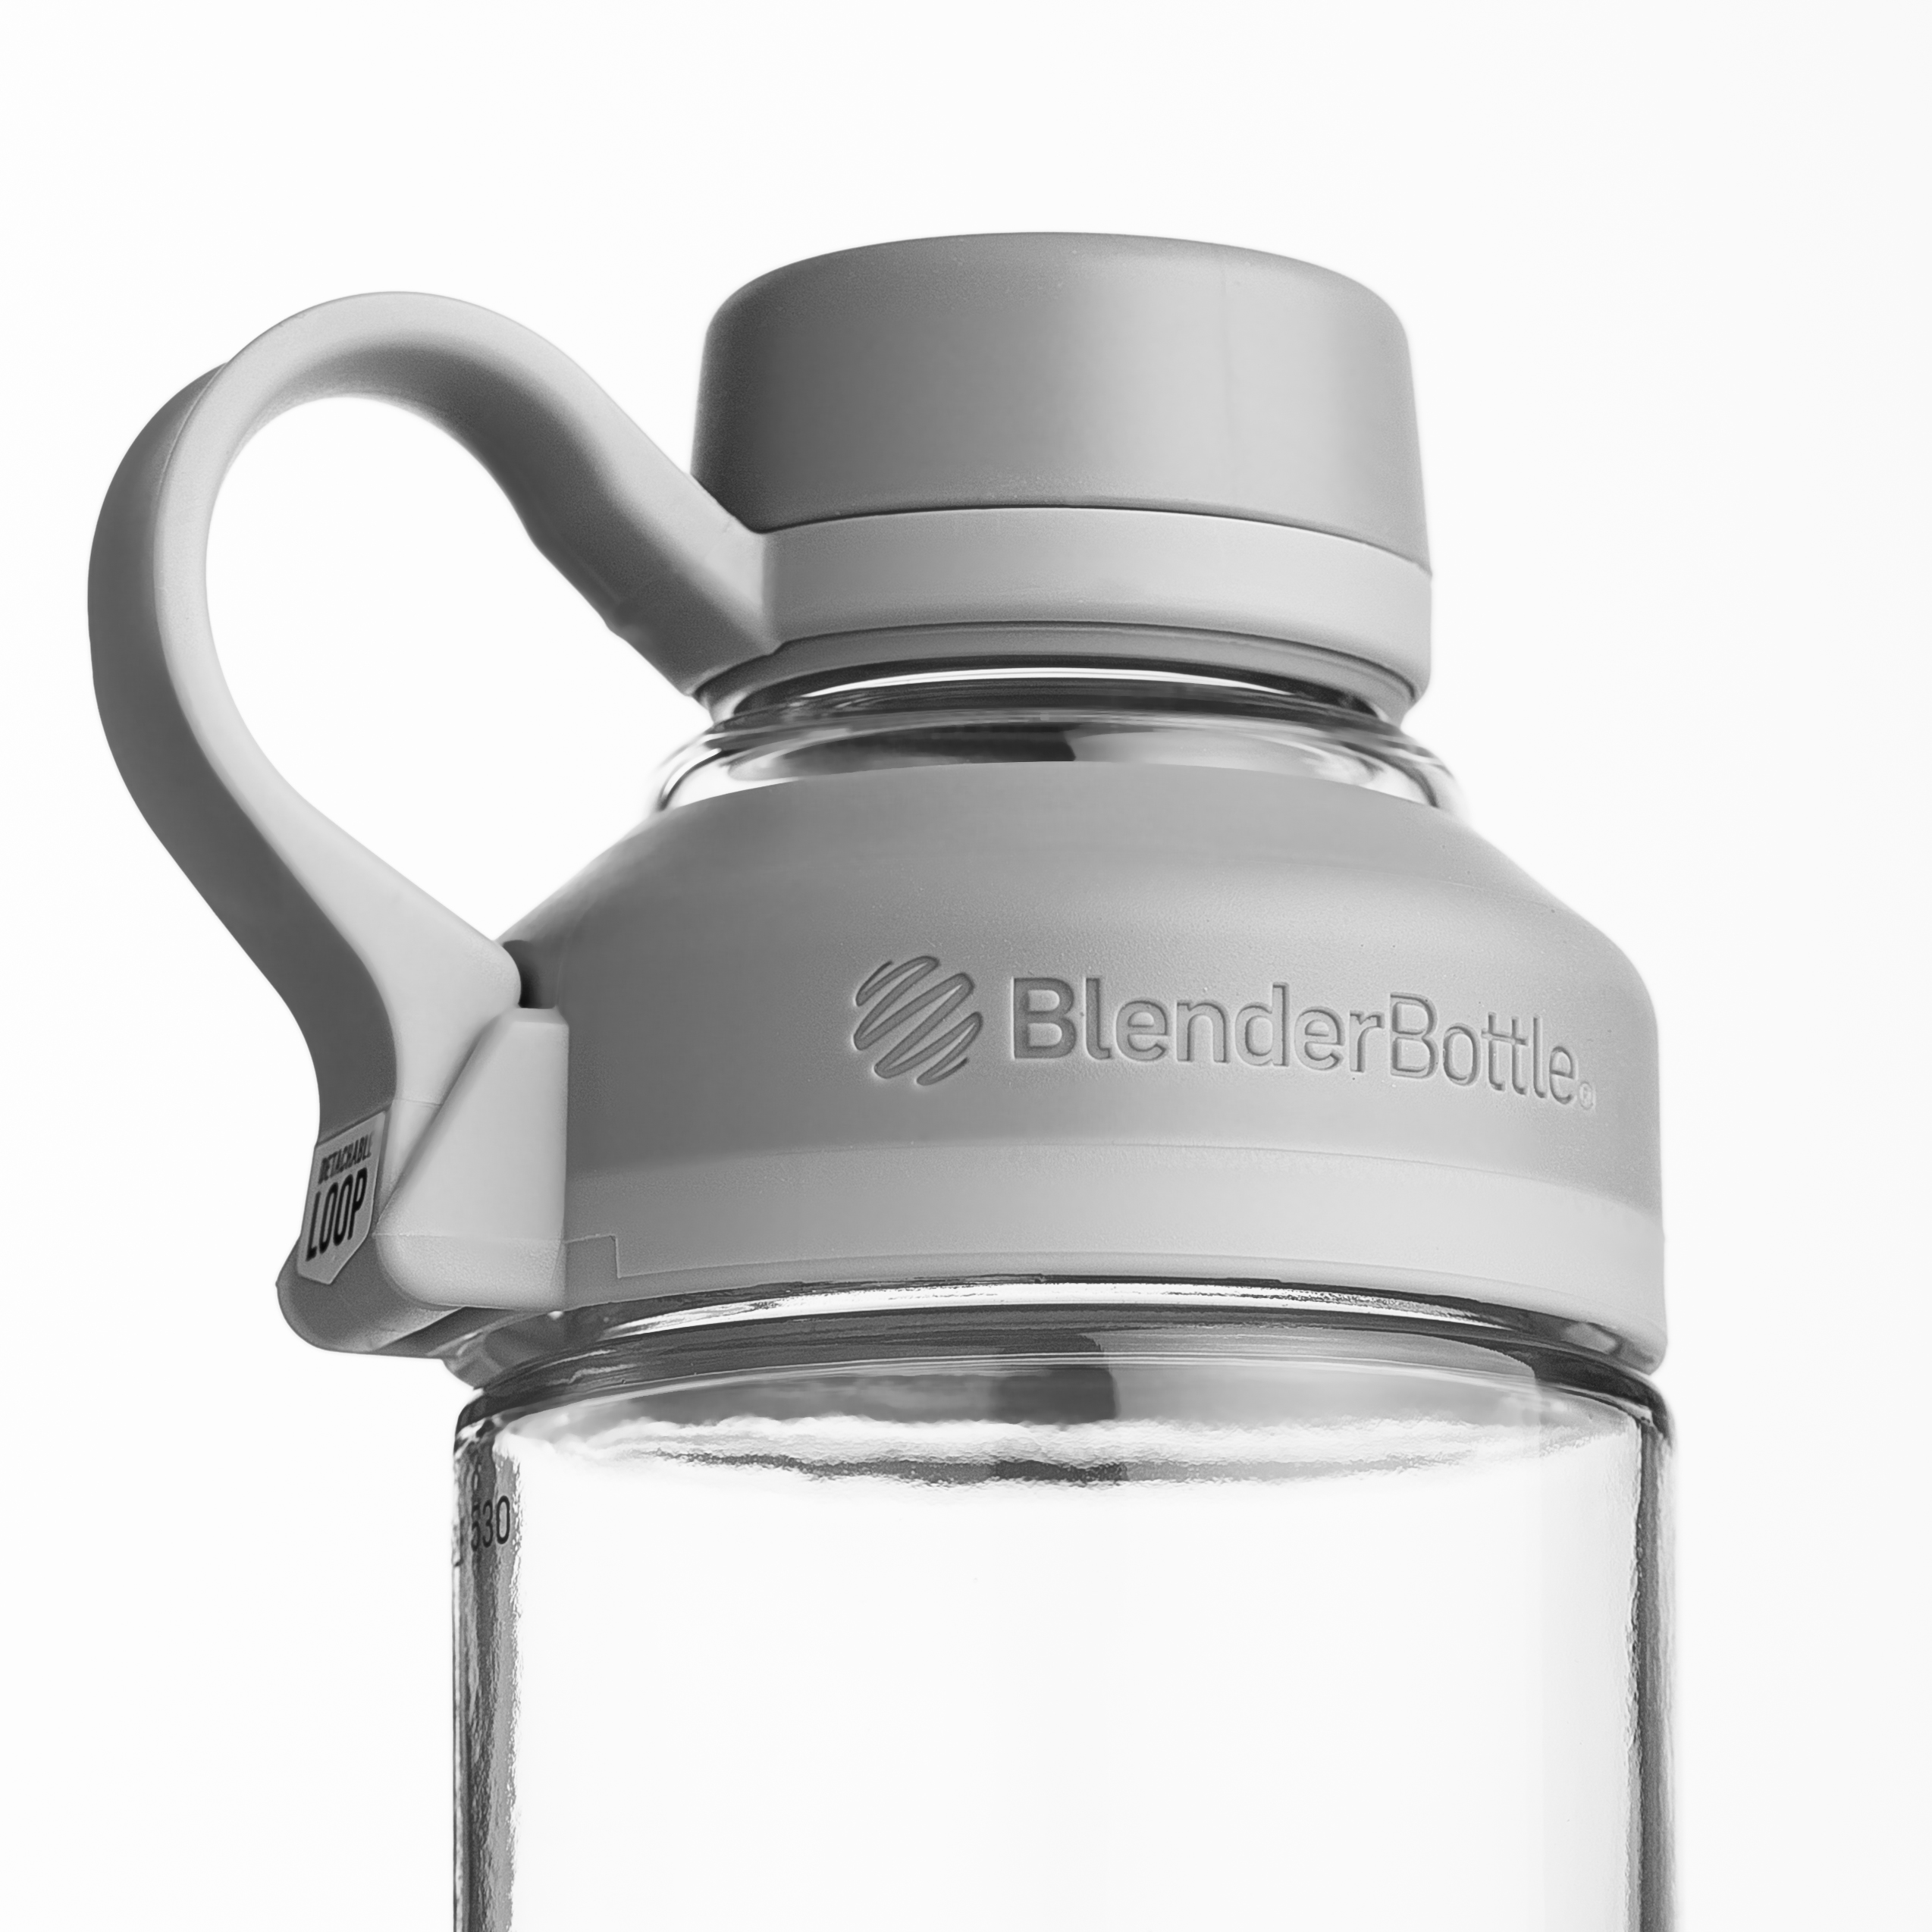 BlenderBottle Mantra 20 oz Glass Shaker Bottle Purple Plum with Twist Lid - image 4 of 10